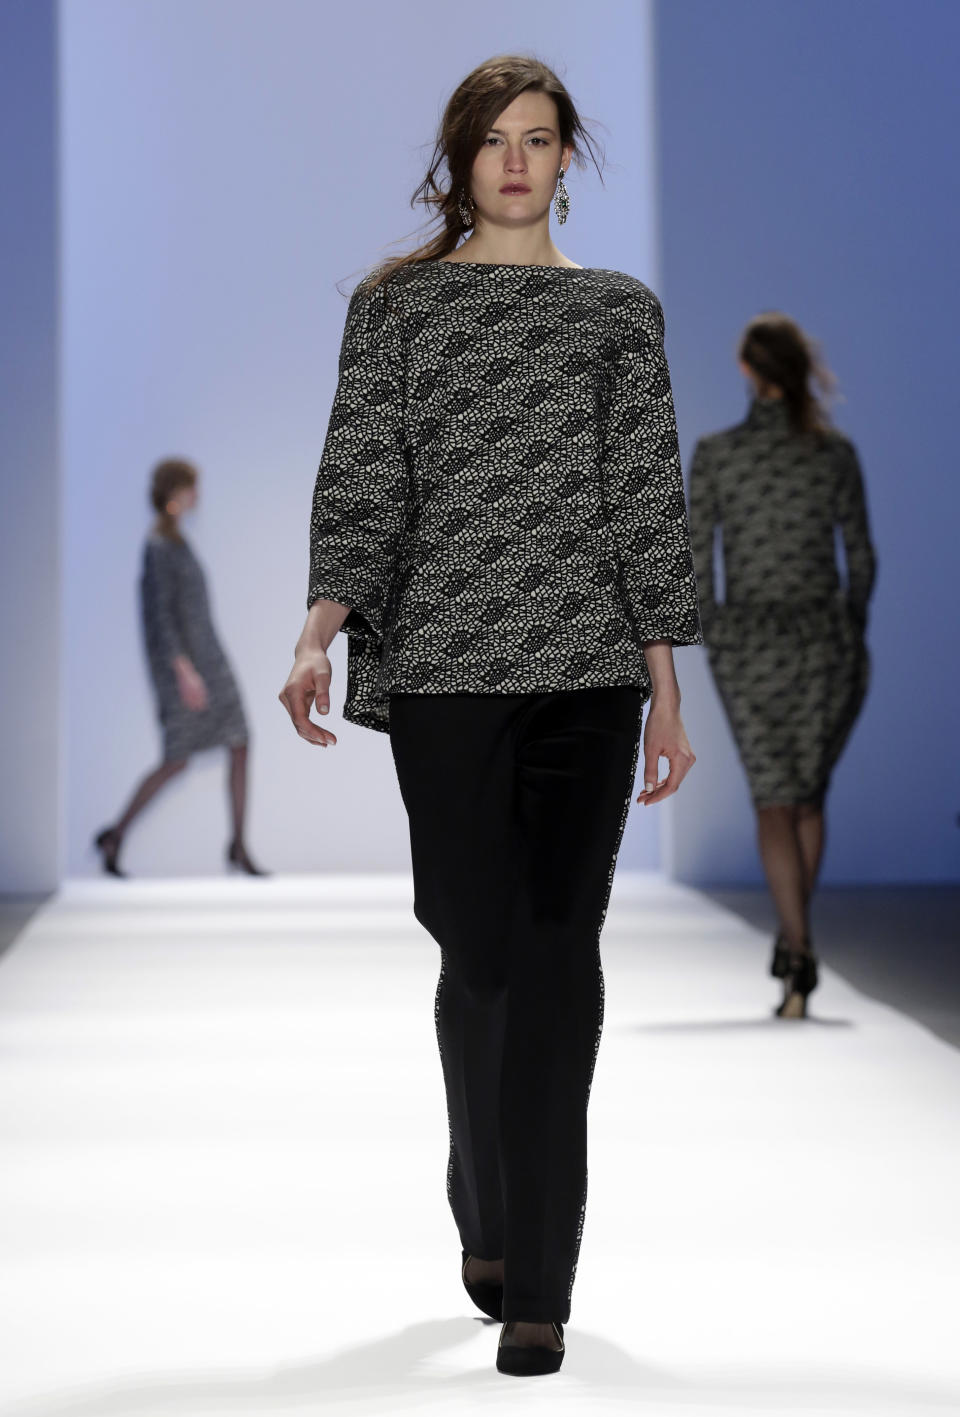 The Tadashi Shoji Fall 2013 collection is modeled during Fashion Week in New York on Thursday, Feb. 7, 2013. (AP Photo/Richard Drew)